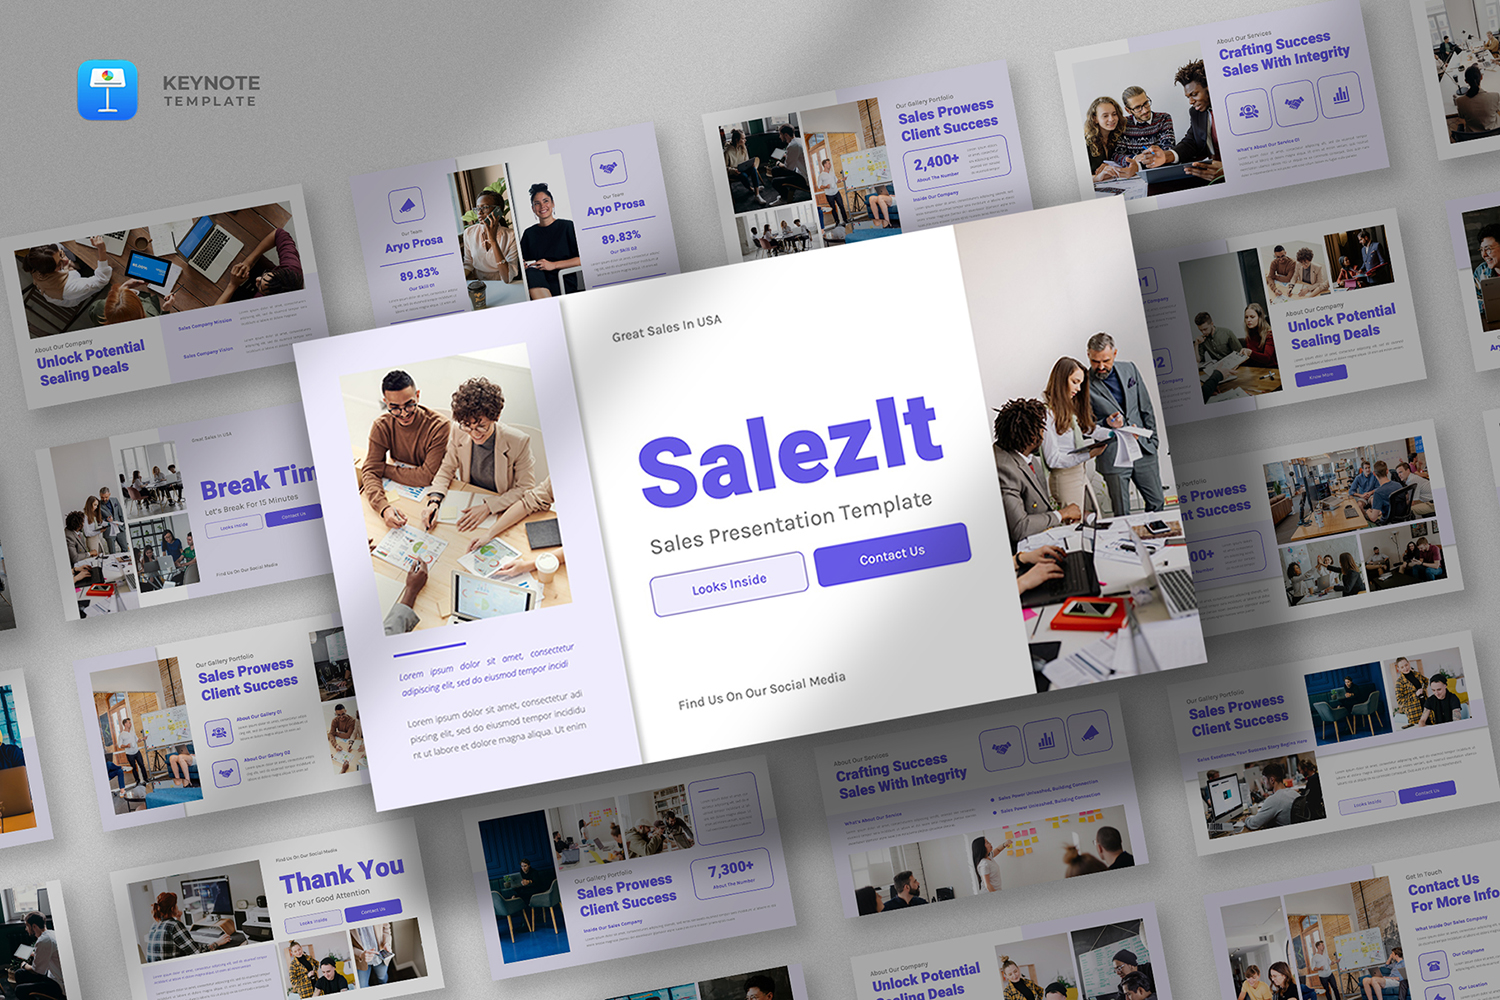 Salezit - Sales Marketing Keynote Template